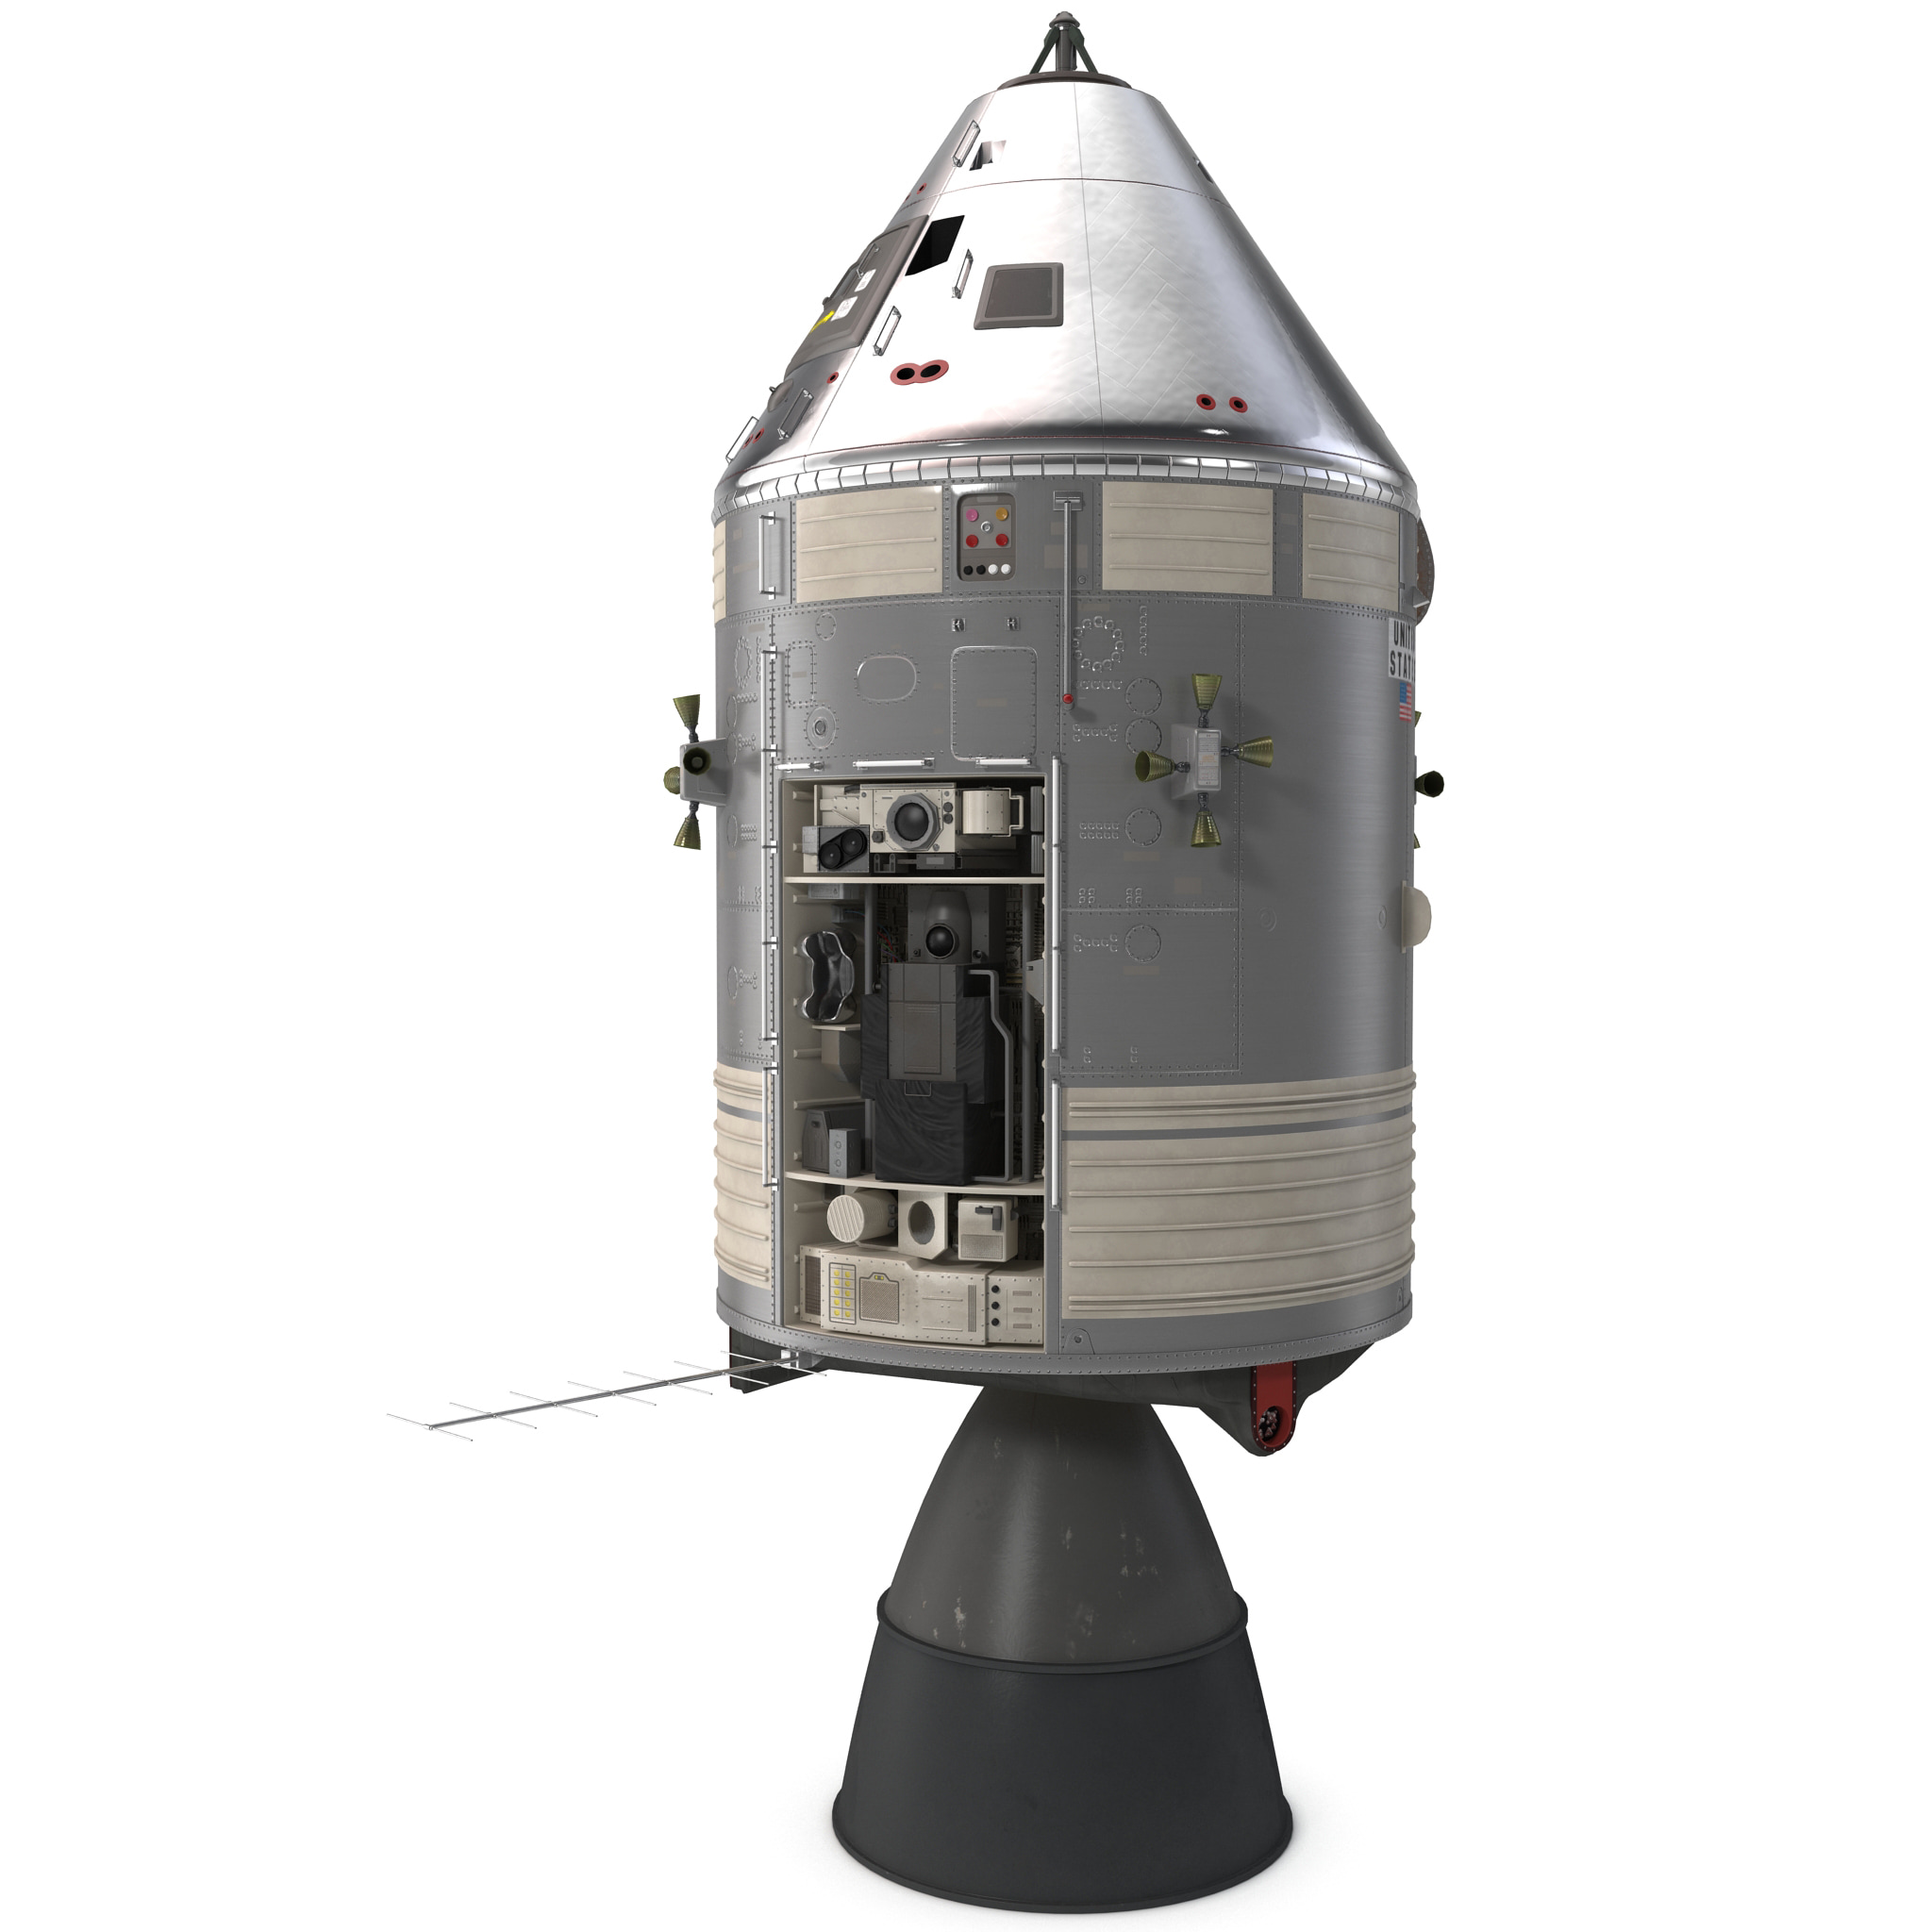 Nasa Spacecraft 3D Models